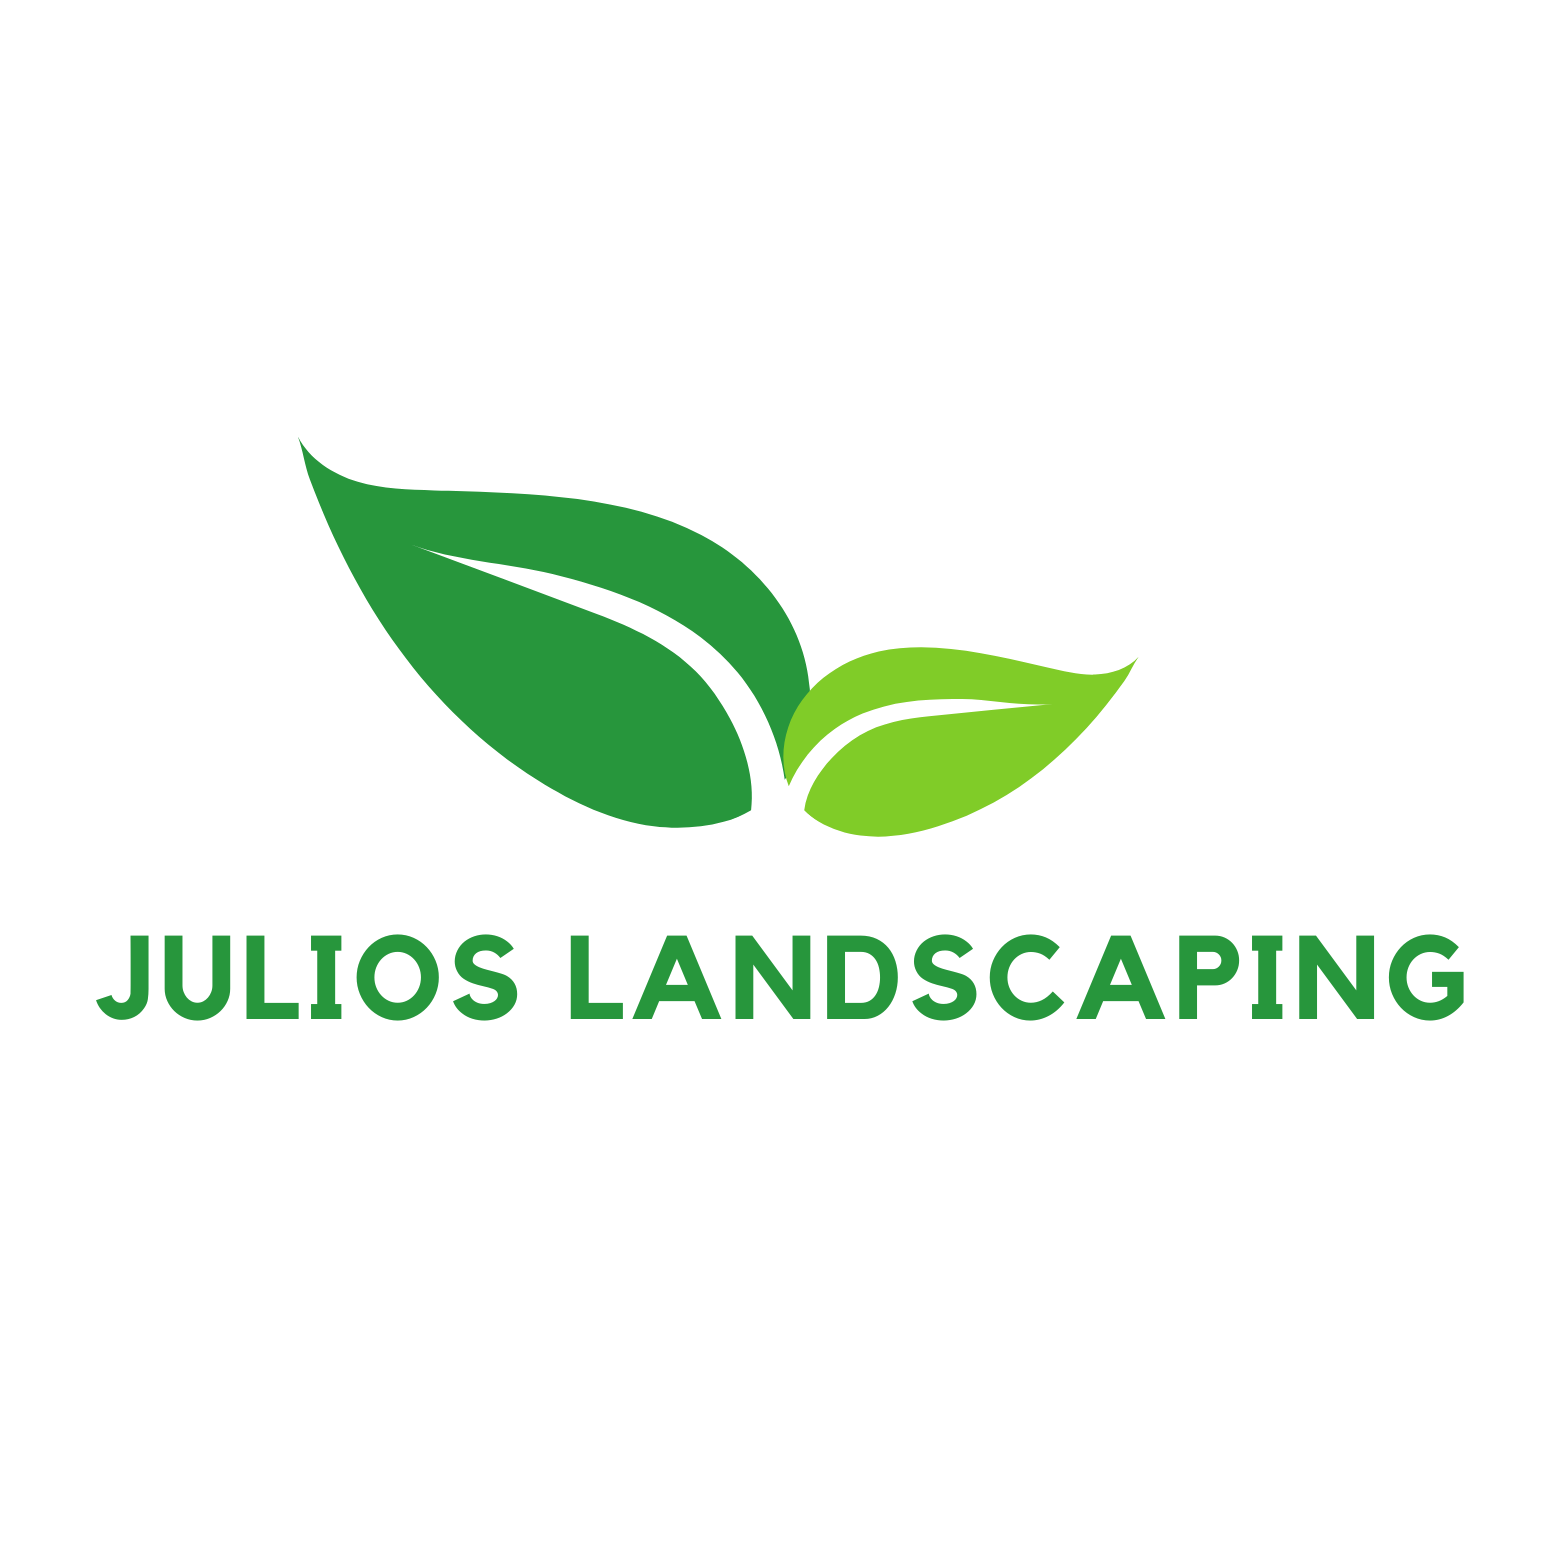 Julios Landscaping